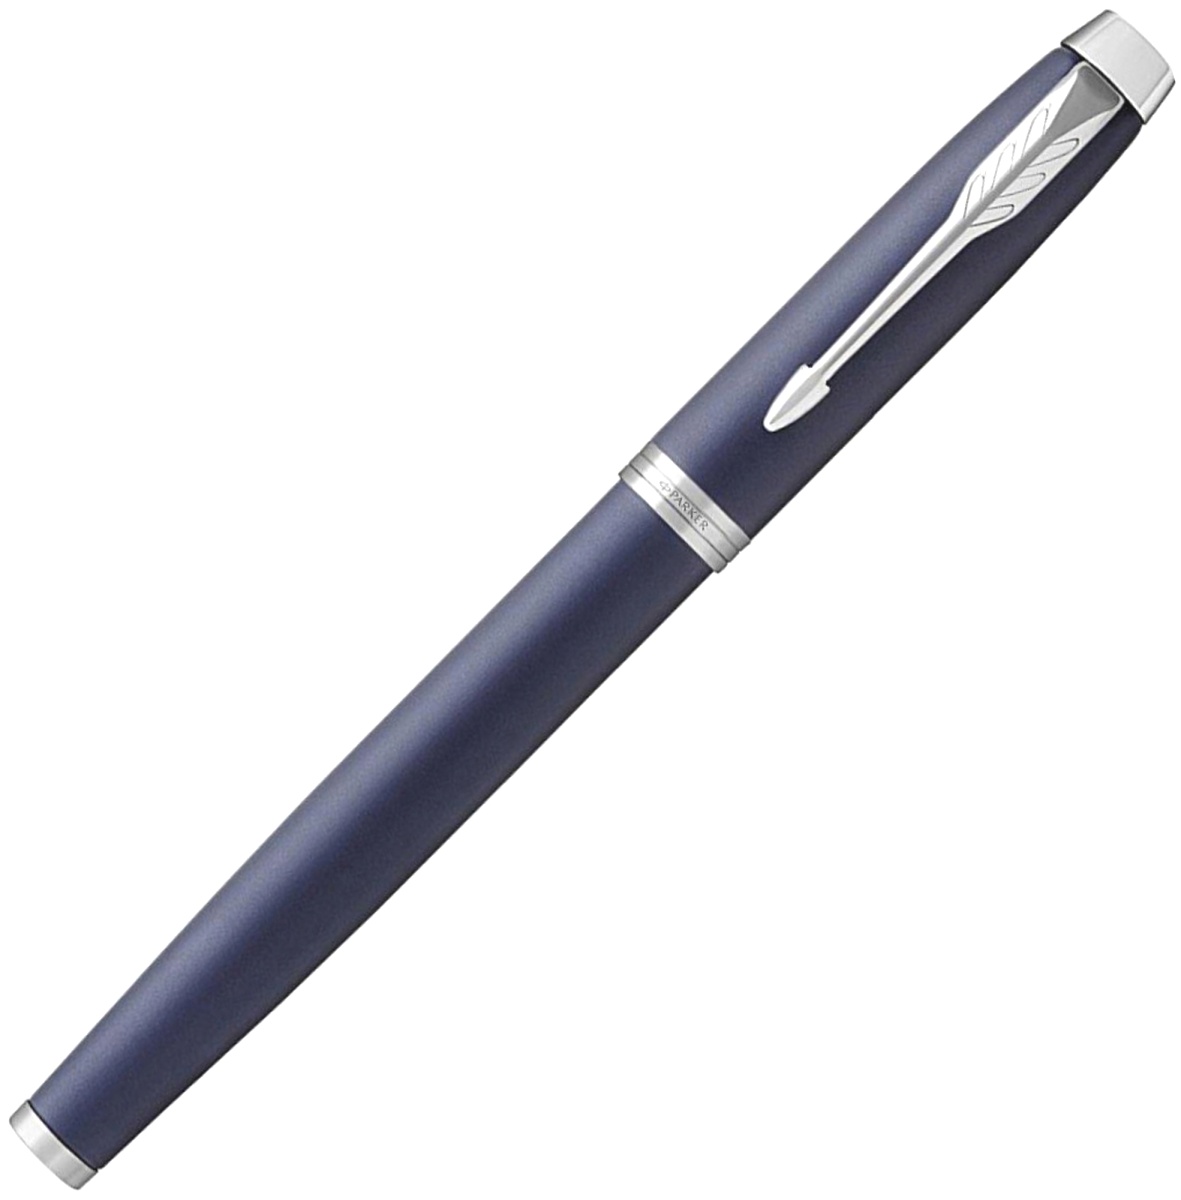  Перьевая ручка Parker IM Core F321, Matte Blue CT (Перо F), фото 2